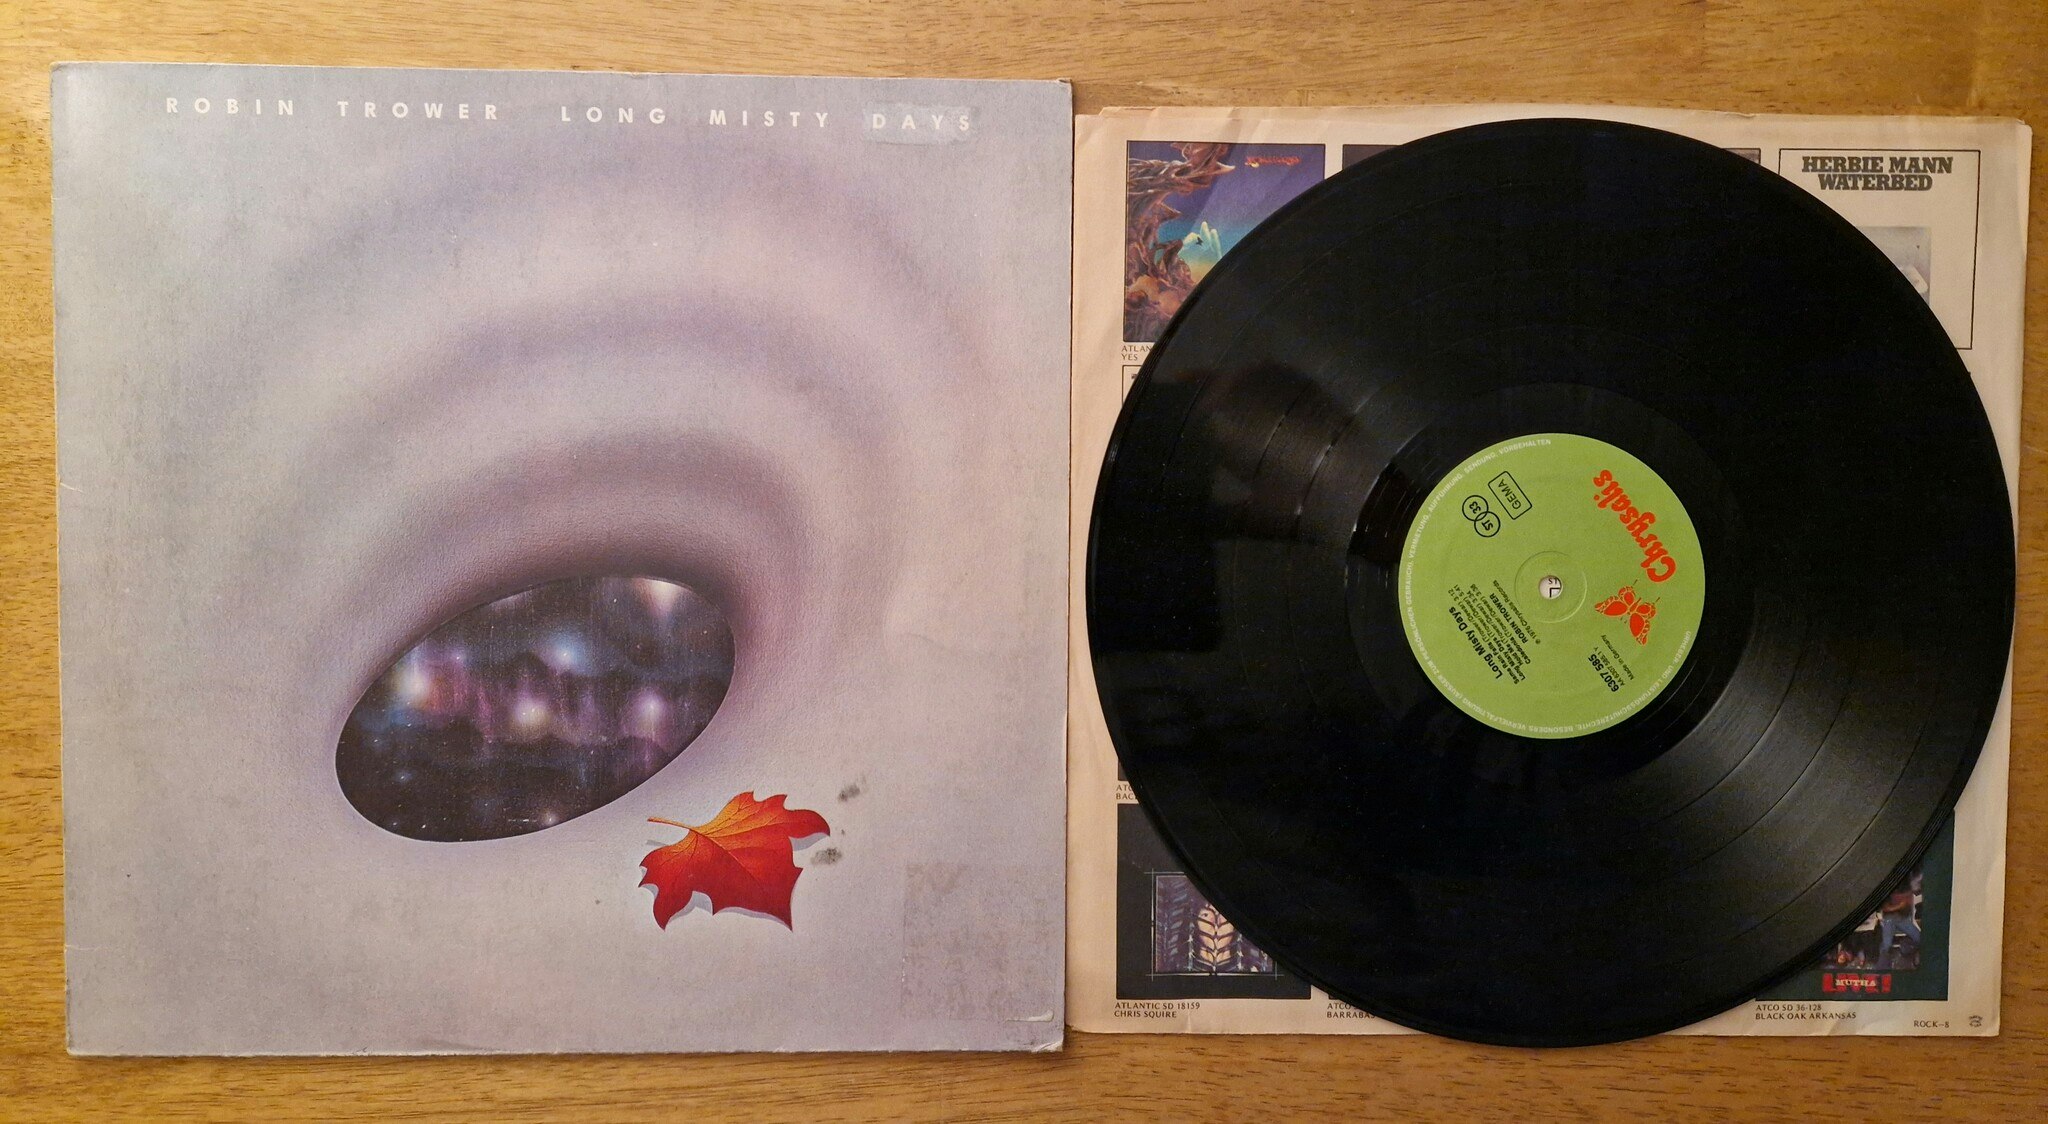 Robin Trower, Long misty days. Vinyl LP